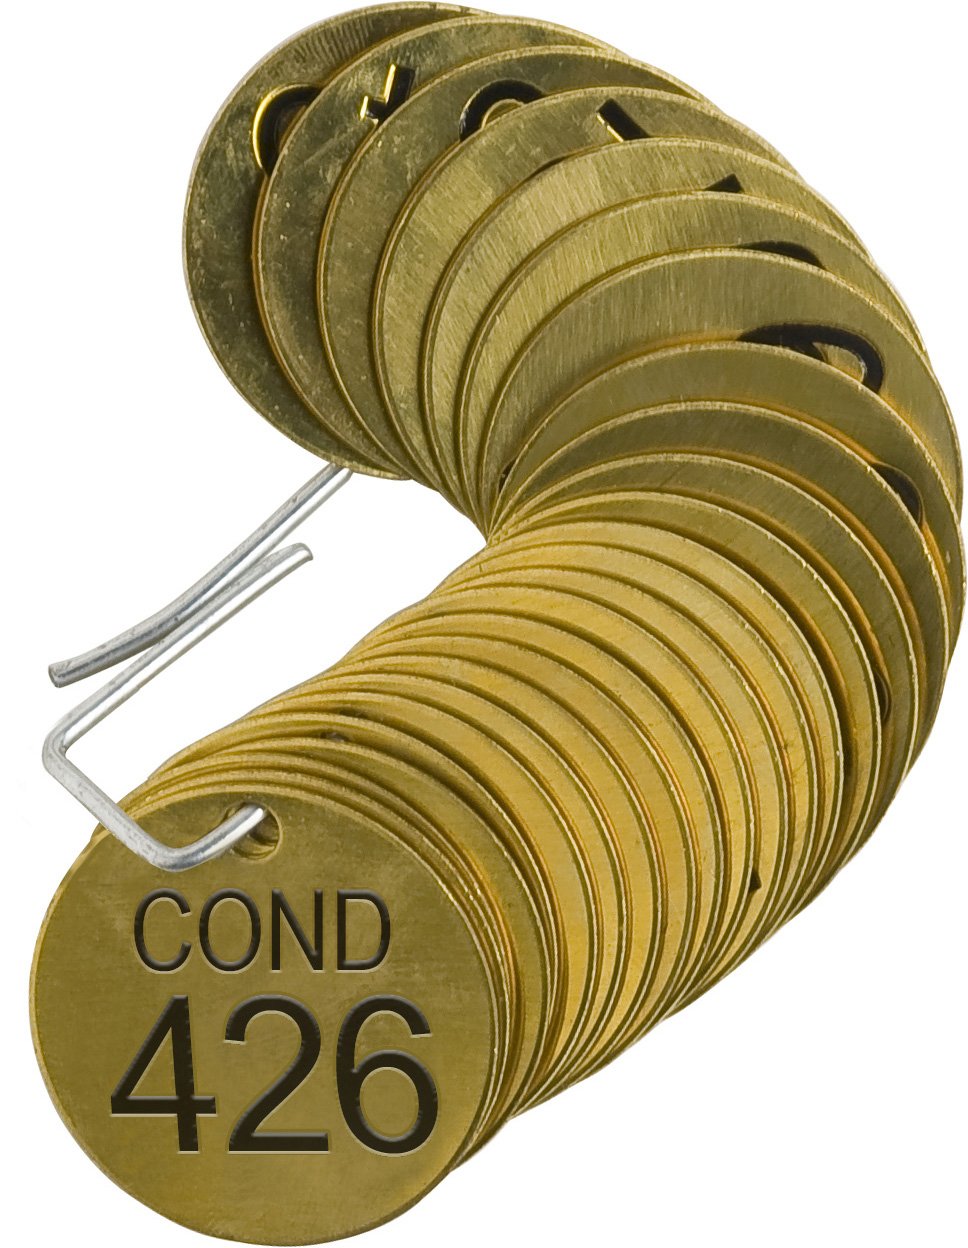  [AUSTRALIA] - Brady 236641 1/2" Diameter Stamped Brass Valve Tags, Numbers 426-450, Legend"COND" (25 per Package)